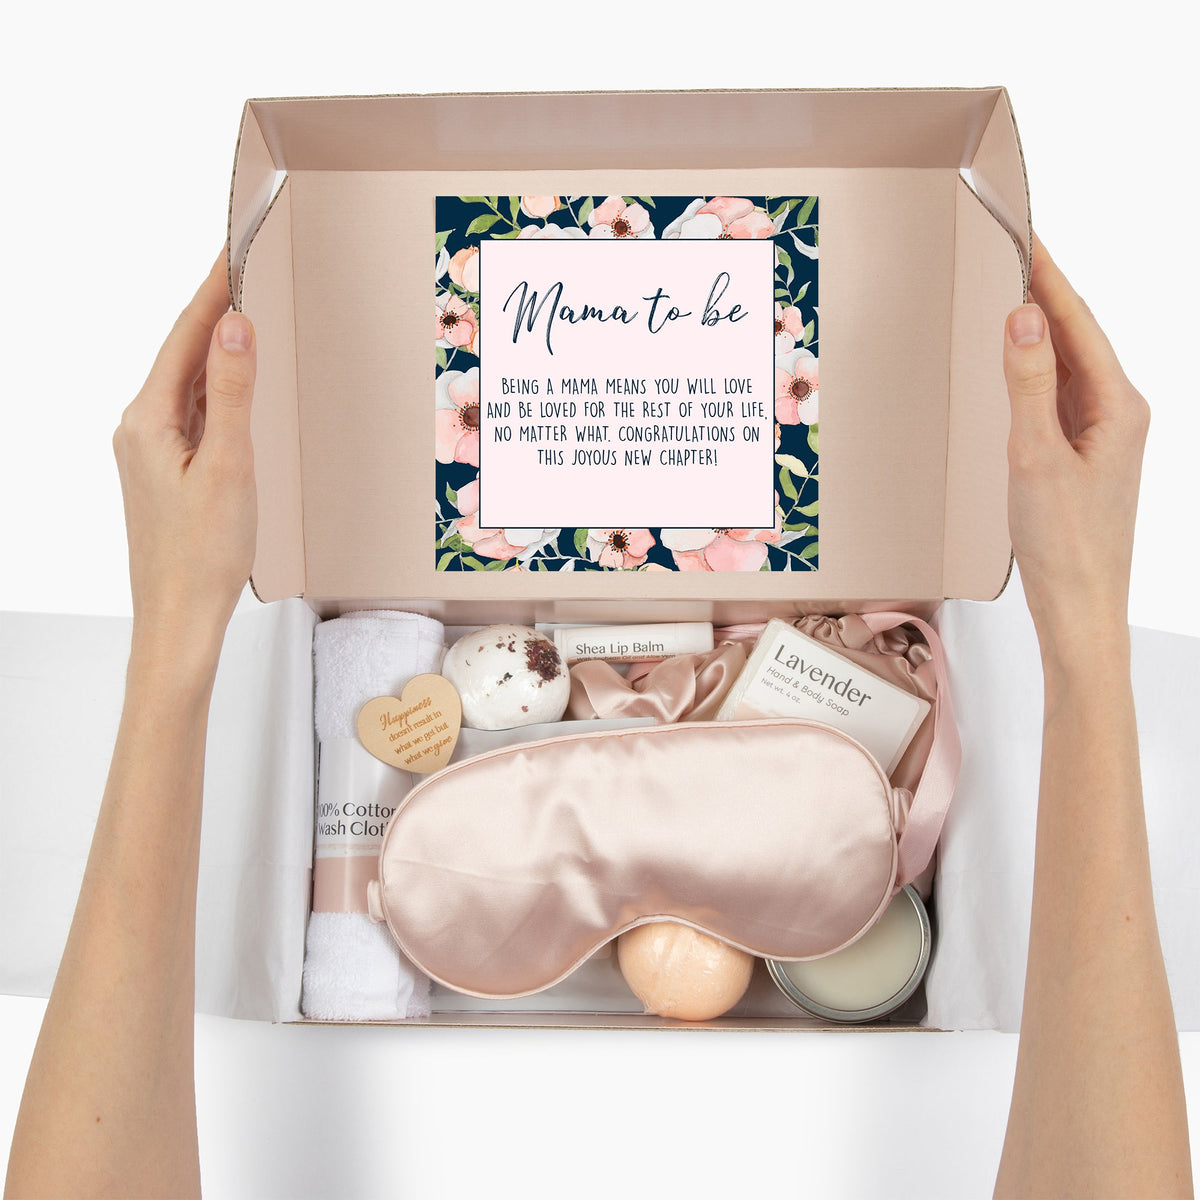 Indulgent Luxury Spa Gift Box for Expecting Mom